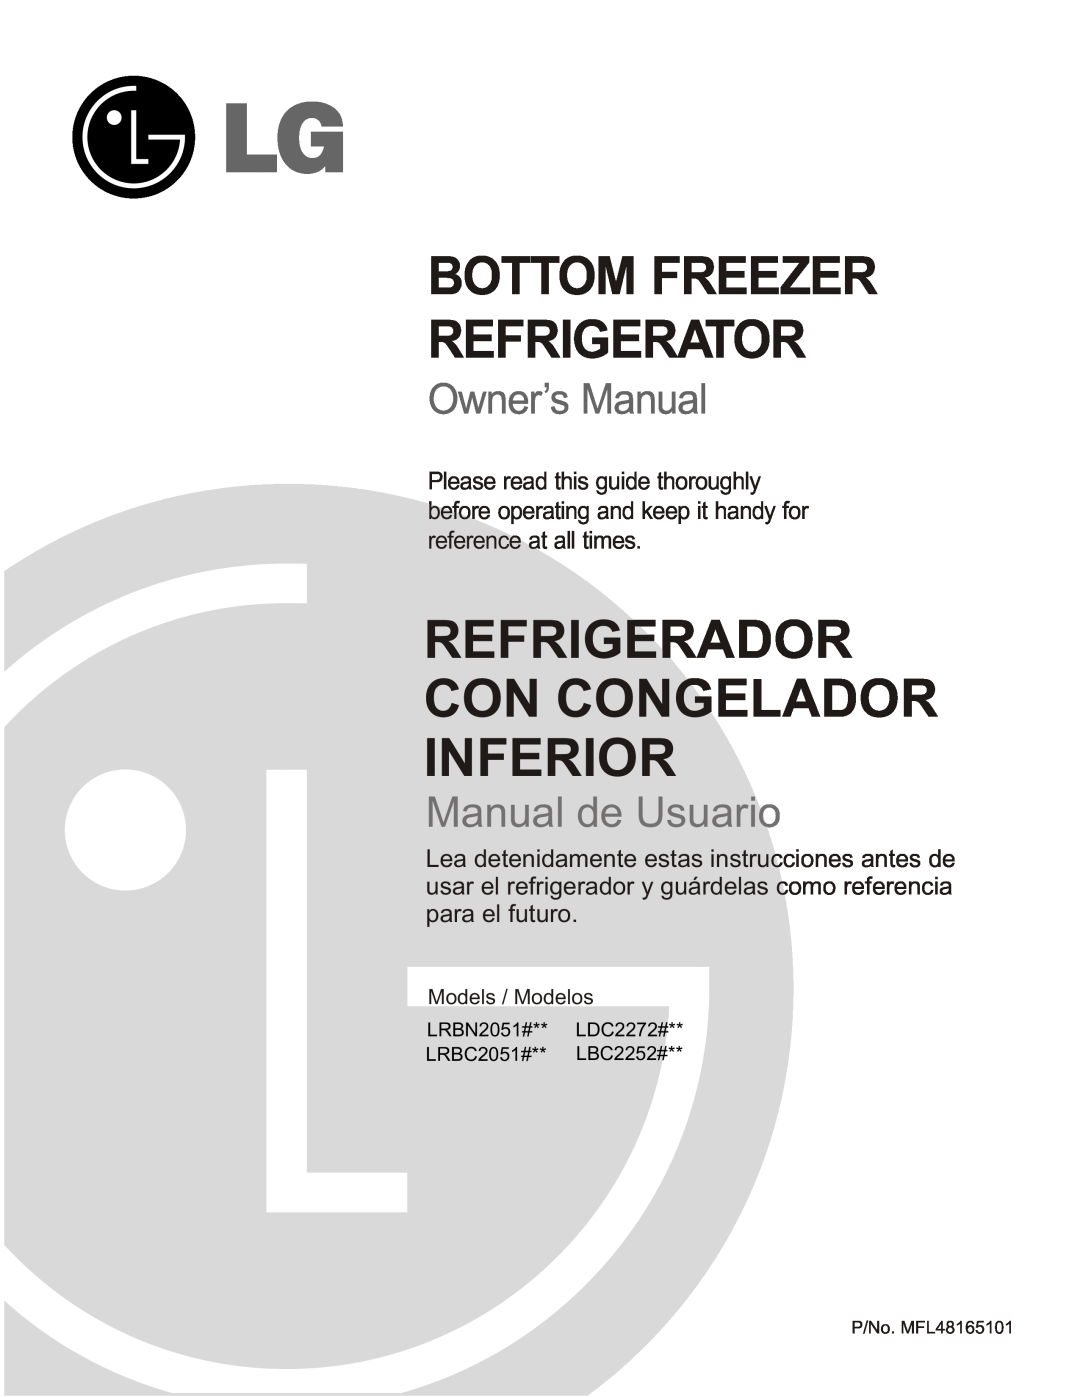 LG Electronics owner manual Models / Modelos, LRBN2051#** LDC2272# LRBC2051#** LBC2252#, Bottom Freezer Refrigerator 